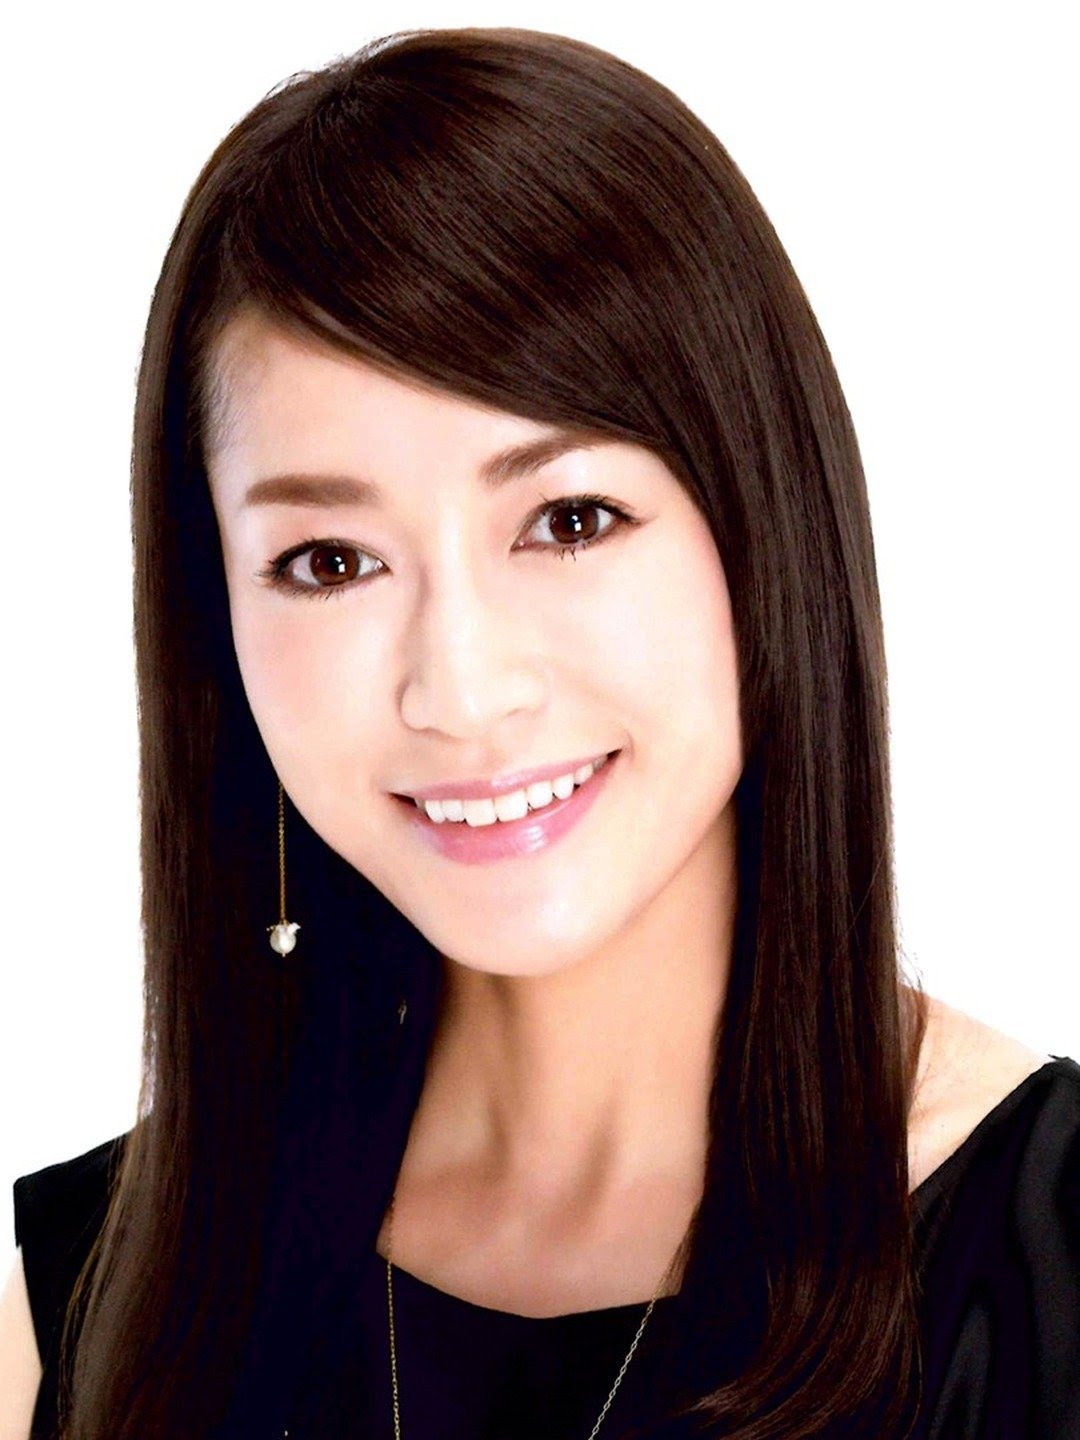 Naomi Hosokawa Japanese Actress, Singer